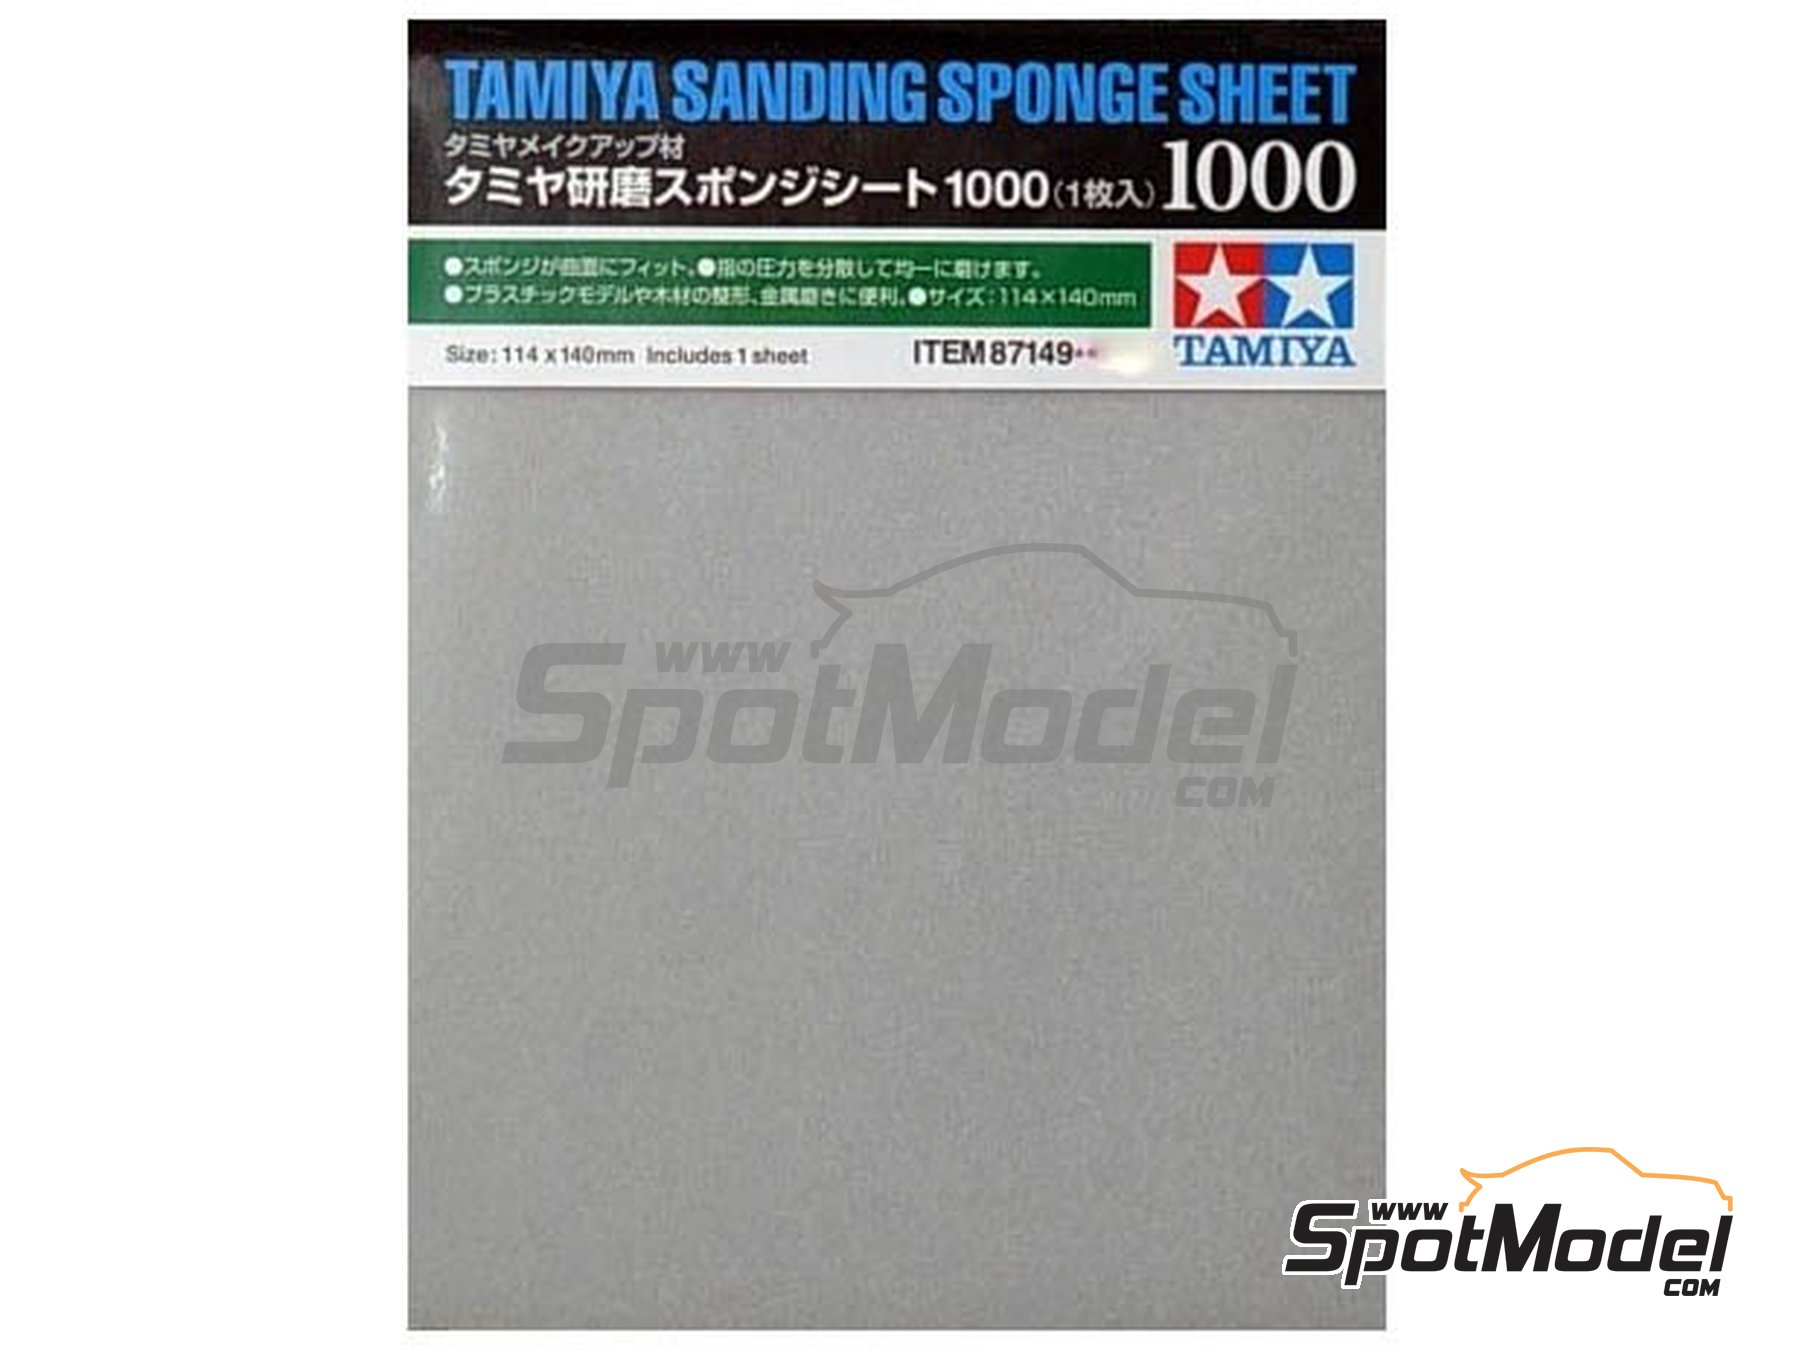 Tamiya #87149 Sanding Sponge Sheet #1000 114 x 140 x 5mm 